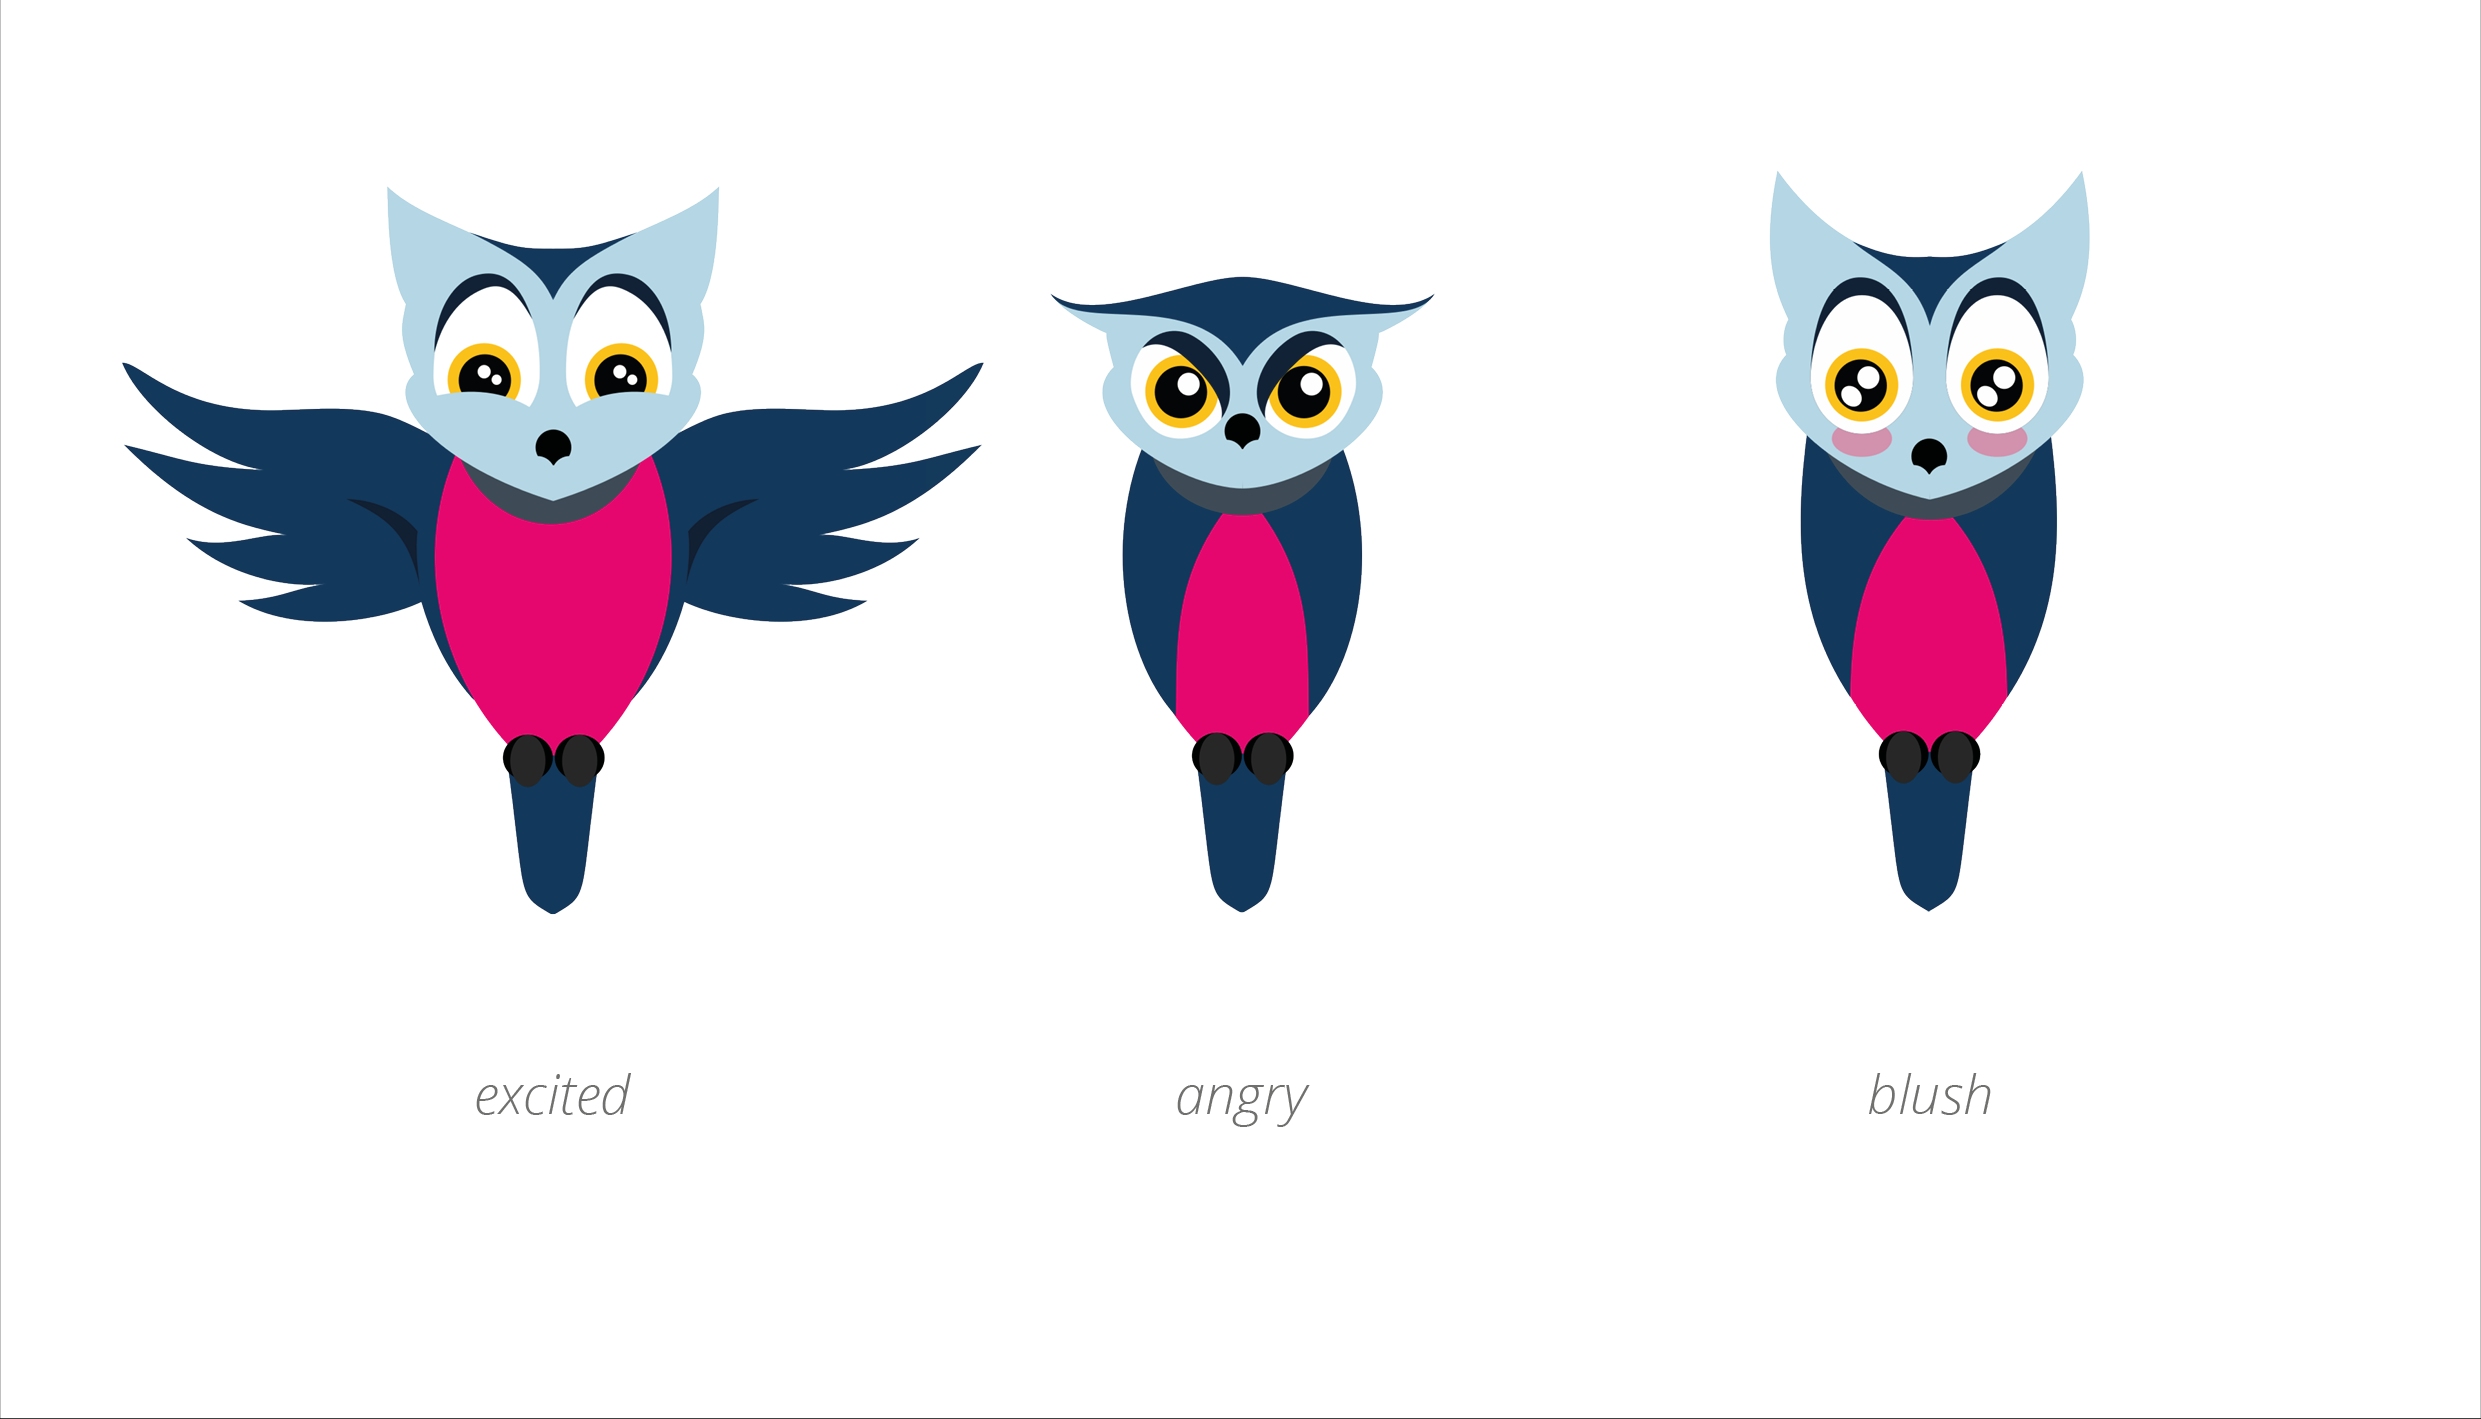 Kassandra Charakterdesign Emotionen excited, angry, blush